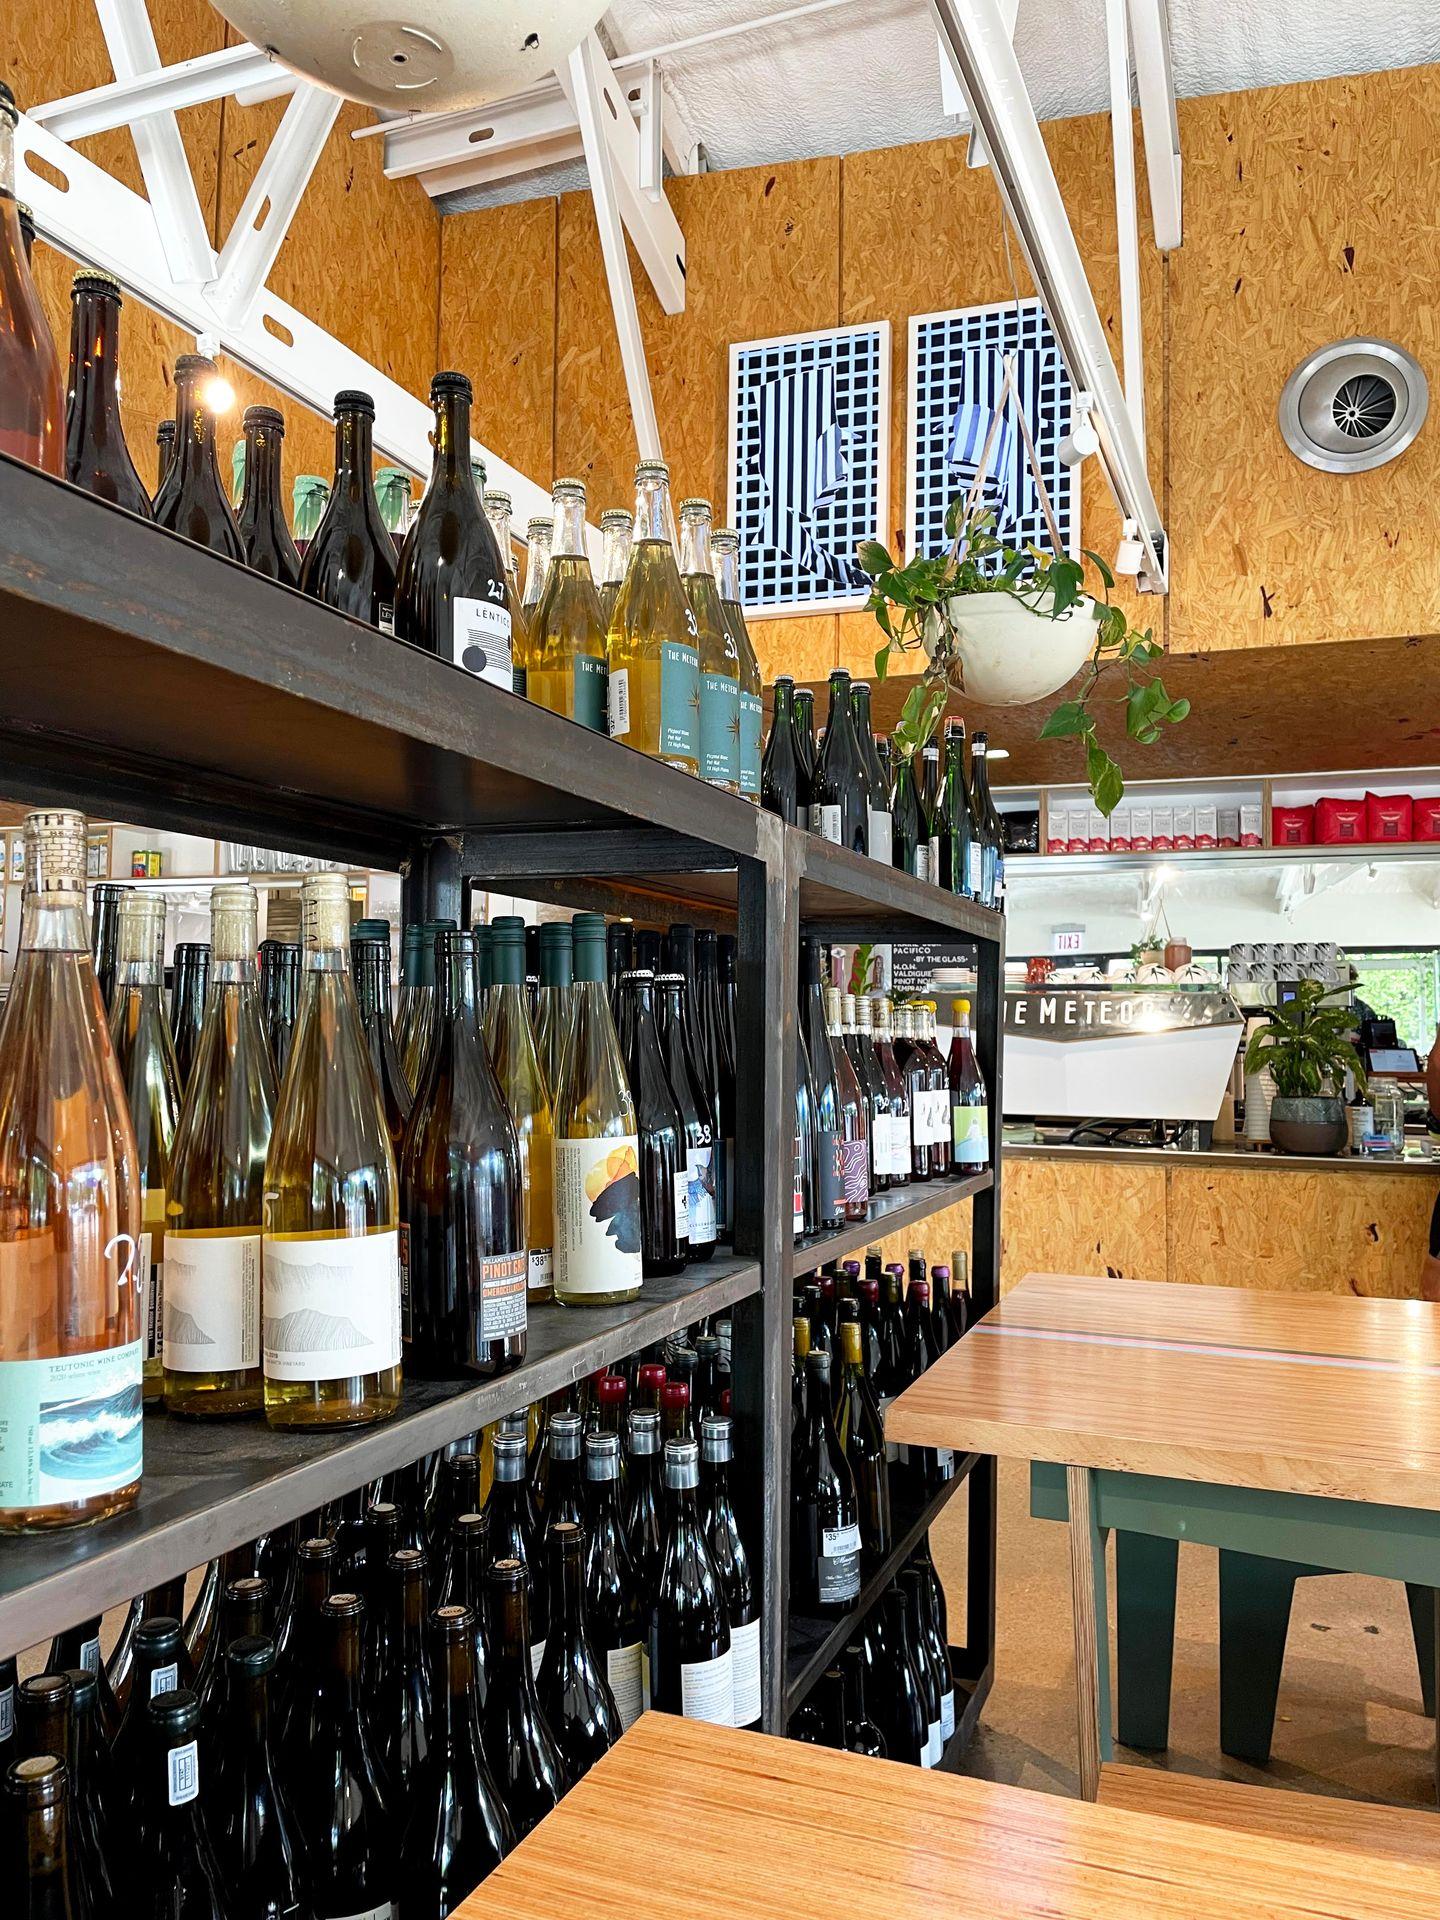 A shelf full of wine bottles inside The Meteor cafe and bar.